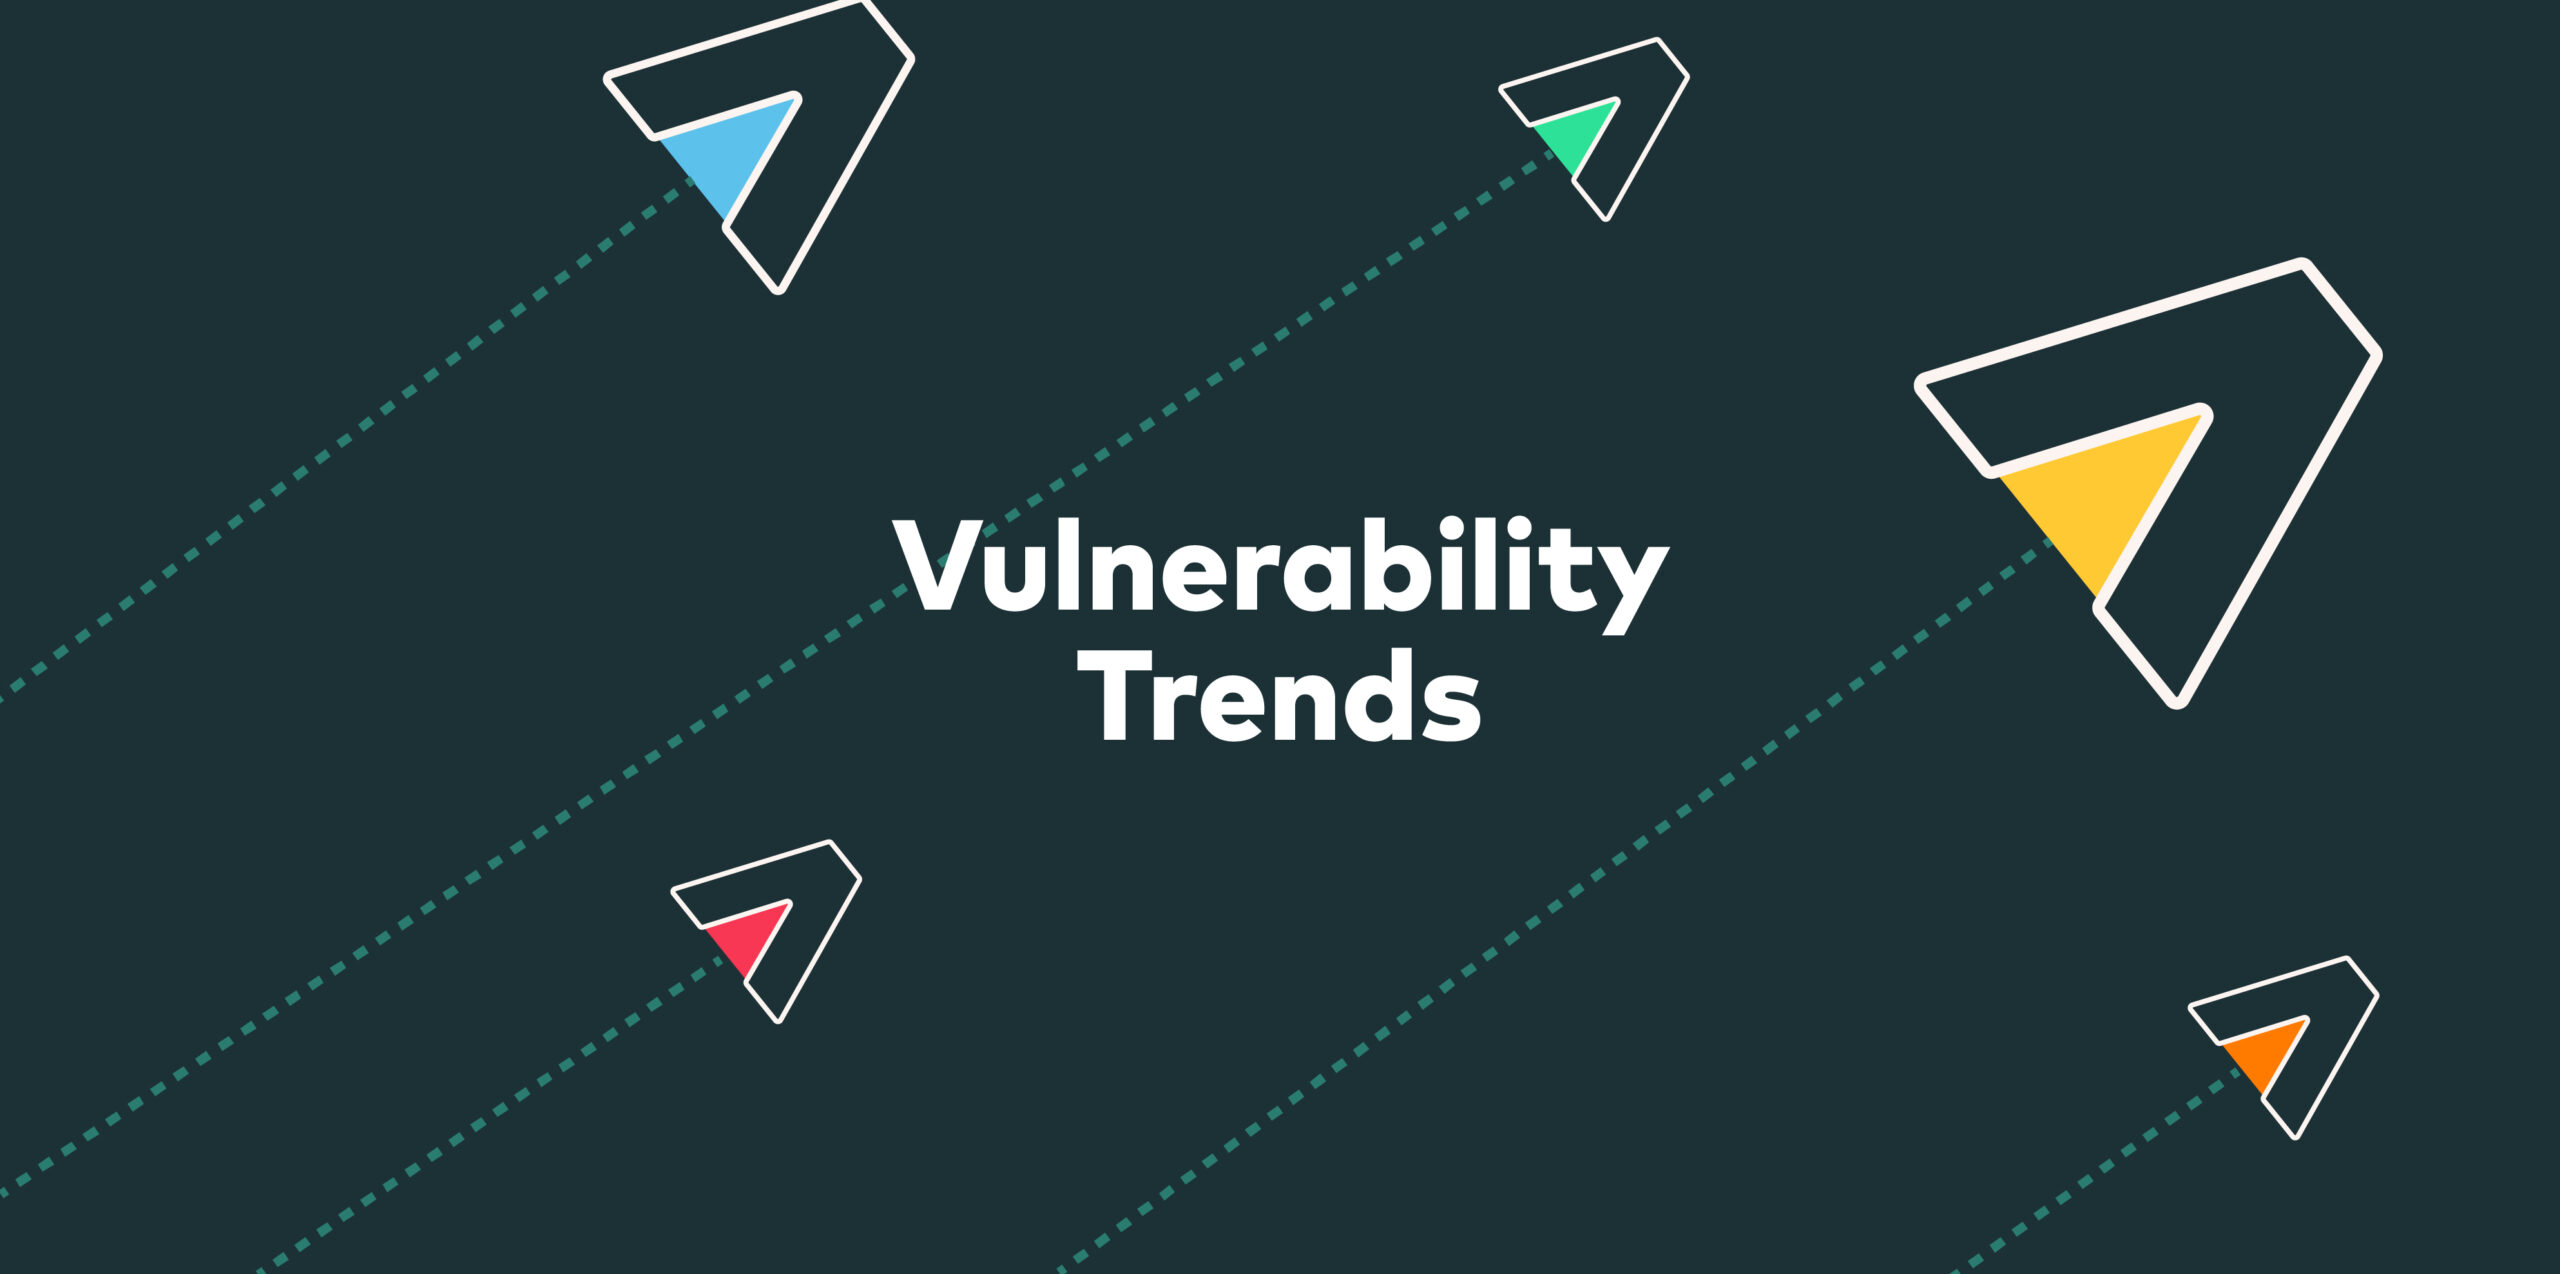 OWASP Top 10 vulnerabilities 2022: what we learned